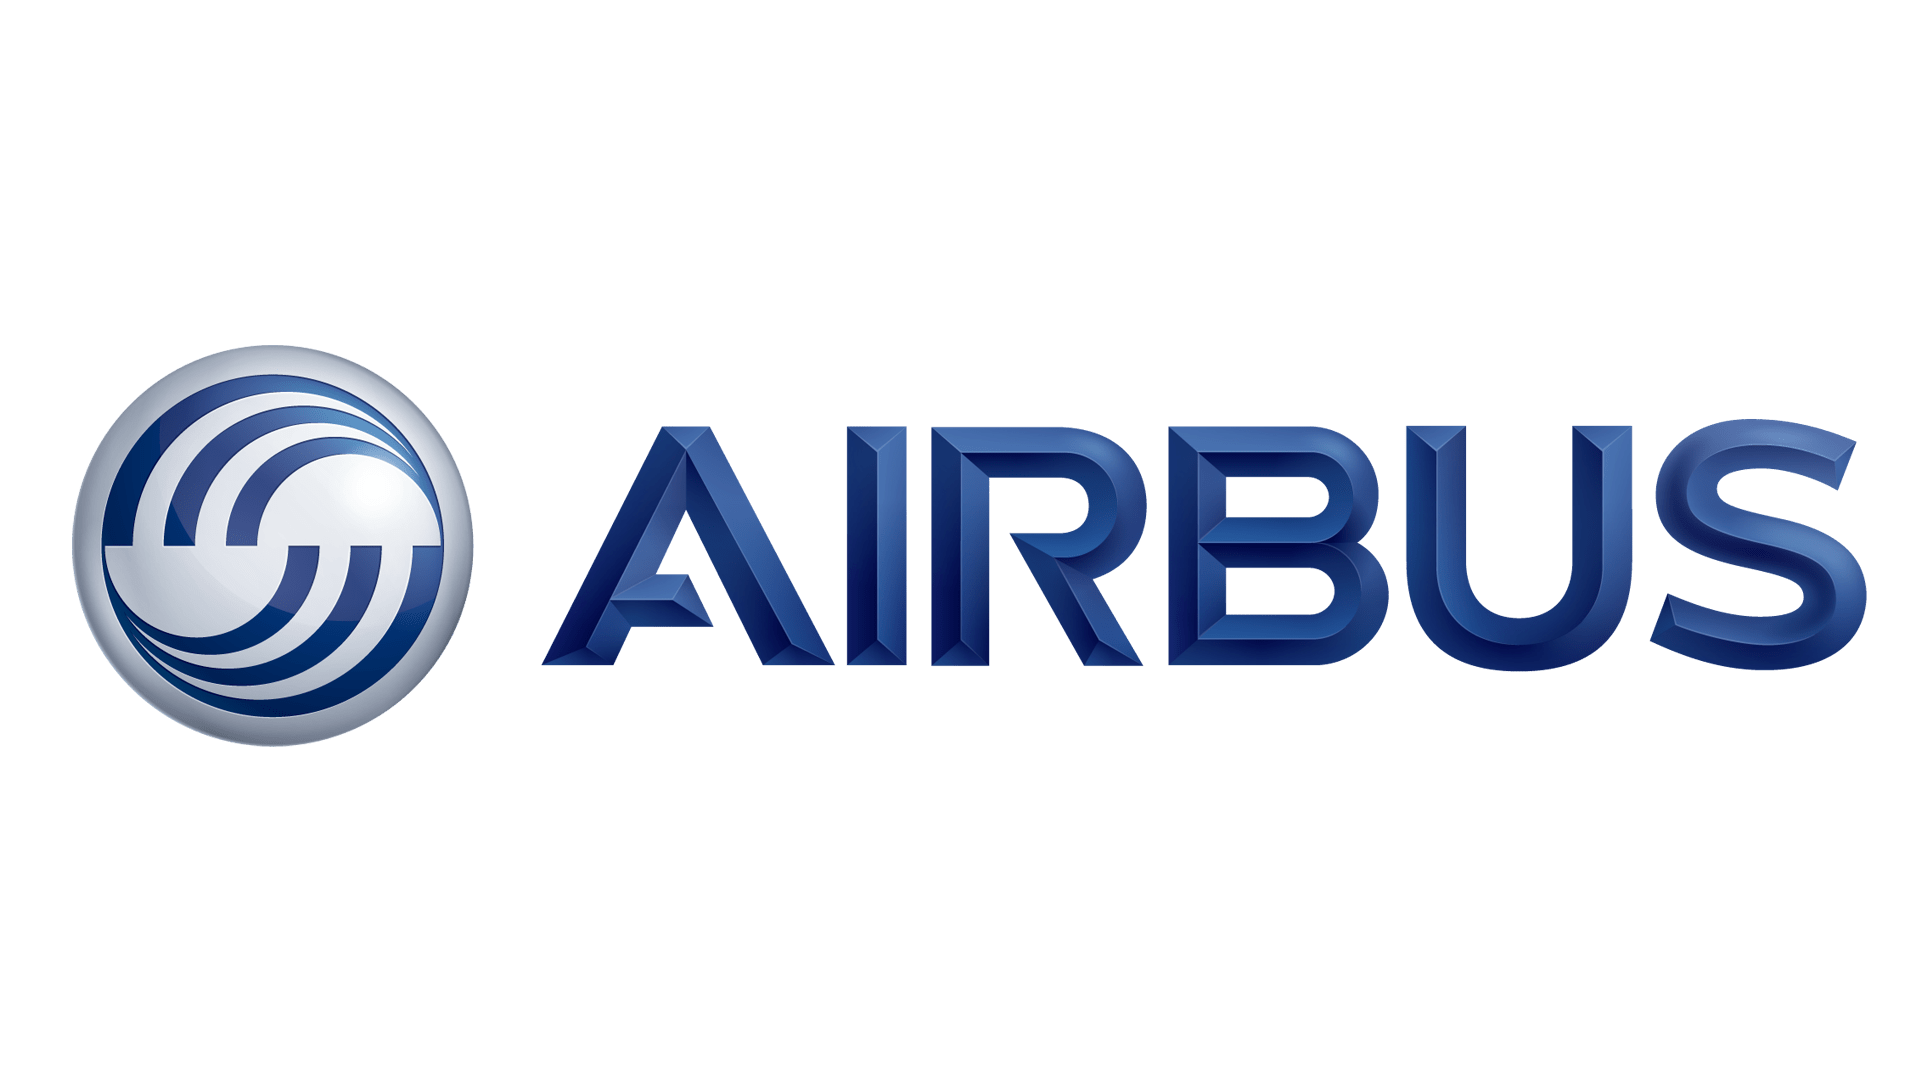 Airbus logo historie og betydning, evolution, symboler Airbus